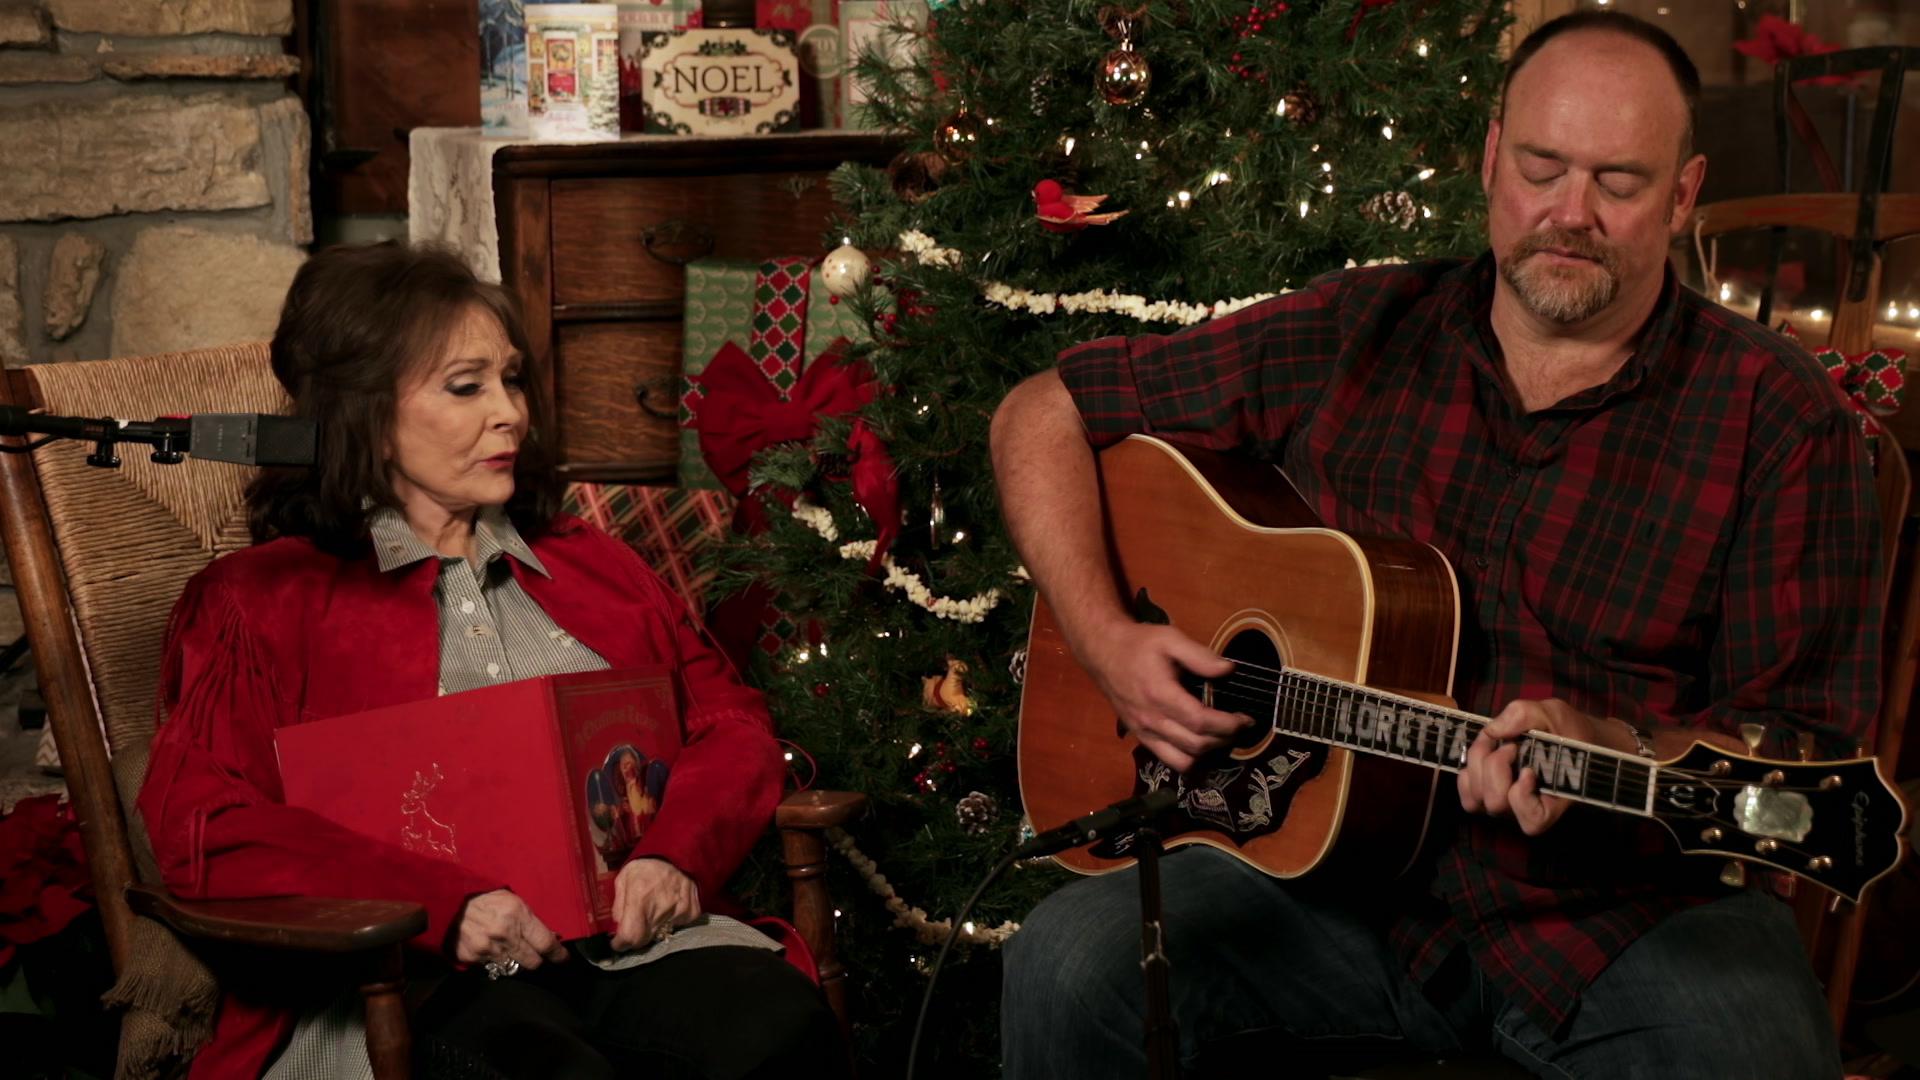 Loretta Lynn - Country Christmas (Official Music Video)